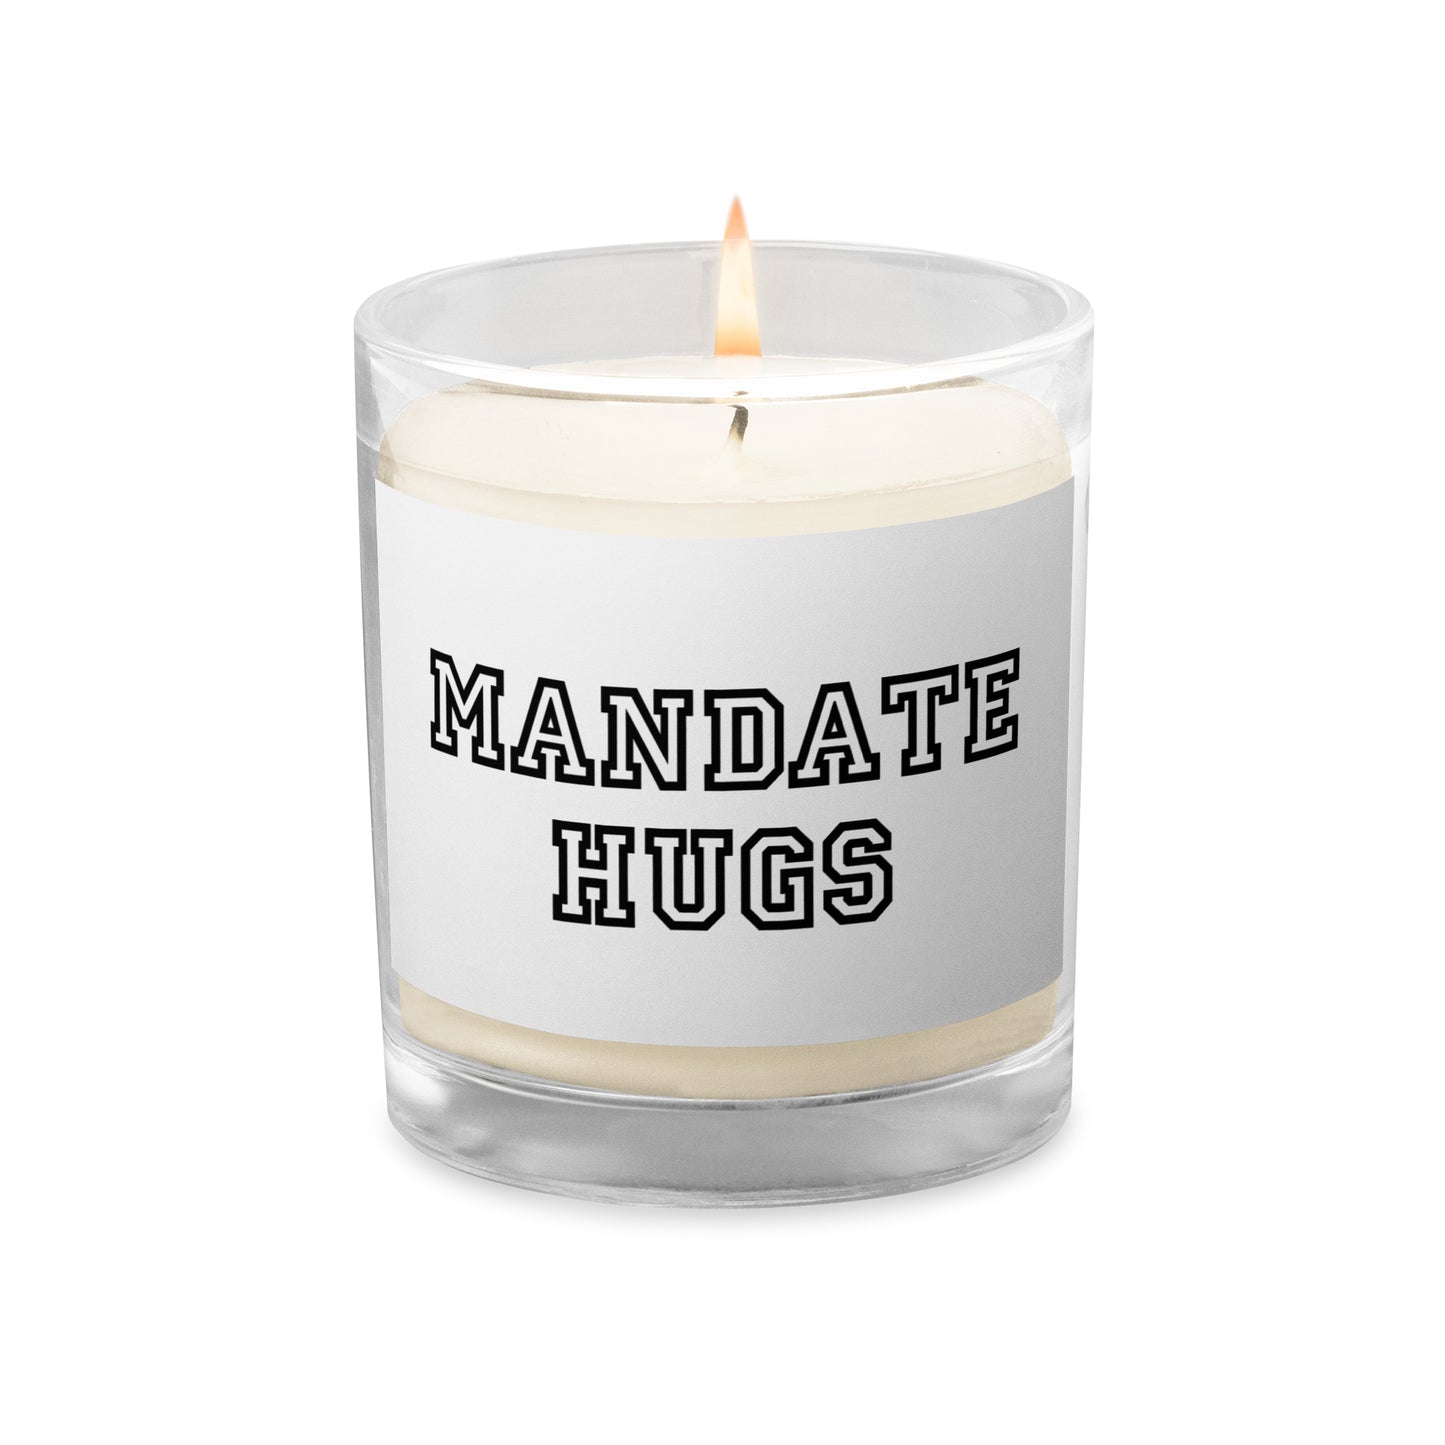 Mandate Hugs Glass Jar Candle